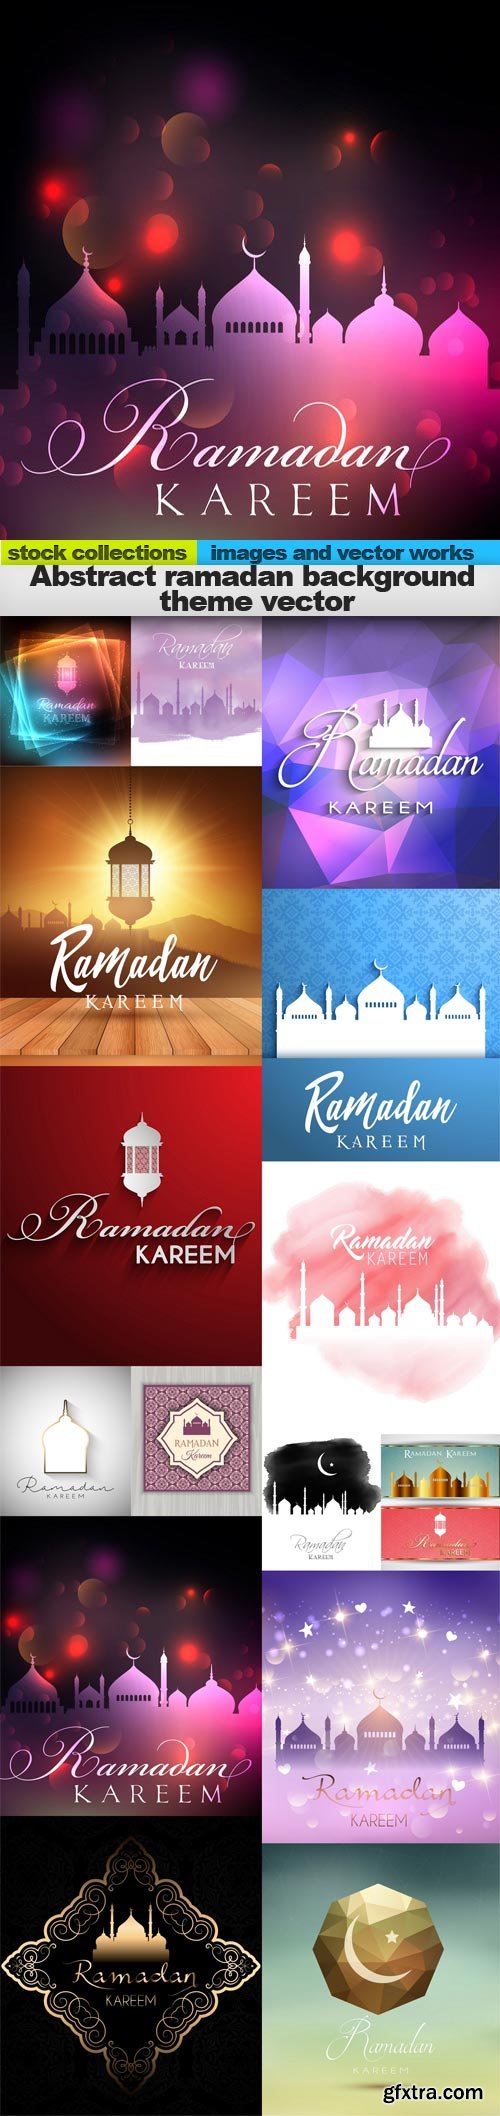 Abstract ramadan background theme vector, 15 x EPS